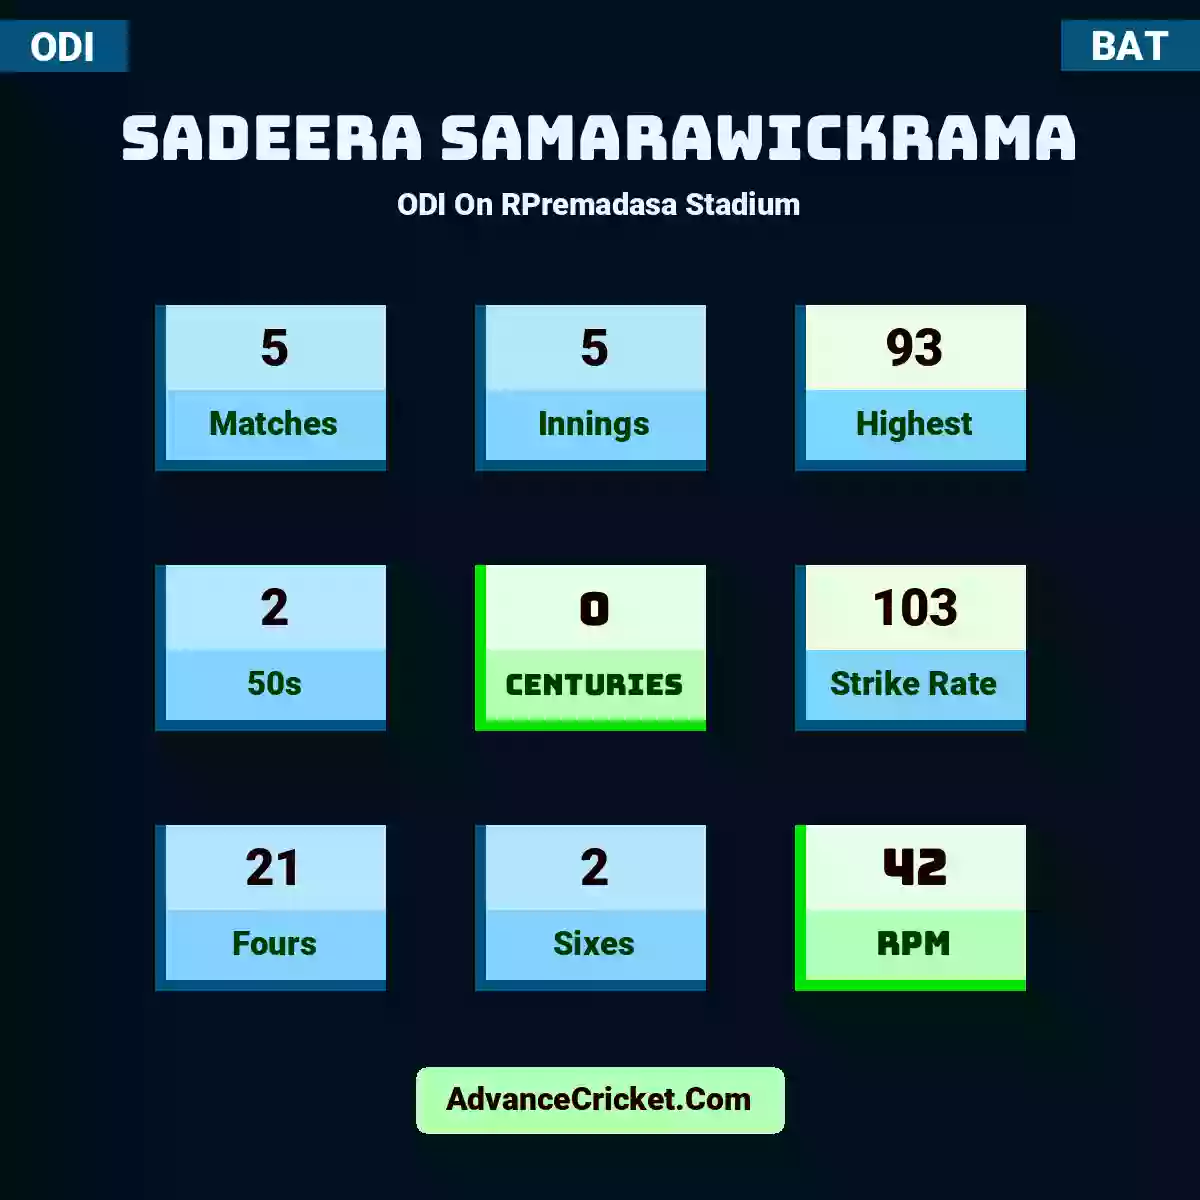 Sadeera Samarawickrama ODI  On RPremadasa Stadium, Sadeera Samarawickrama played 5 matches, scored 93 runs as highest, 2 half-centuries, and 0 centuries, with a strike rate of 103. S.Samarawickrama hit 21 fours and 2 sixes, with an RPM of 42.